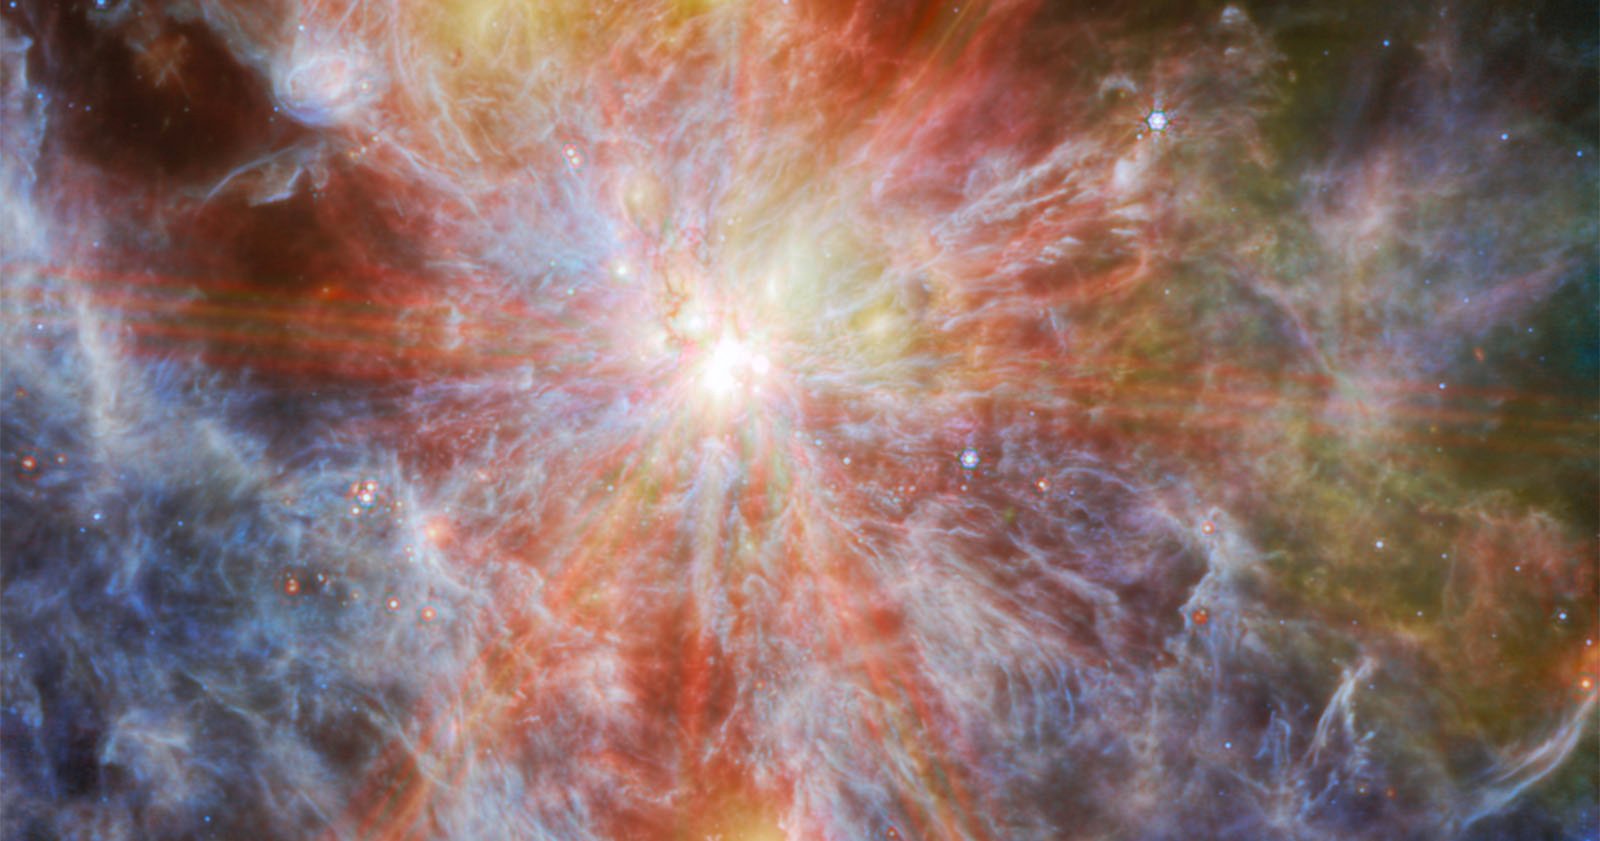 Webbs Newest Nebula Image Looks Like a Colorful Painting